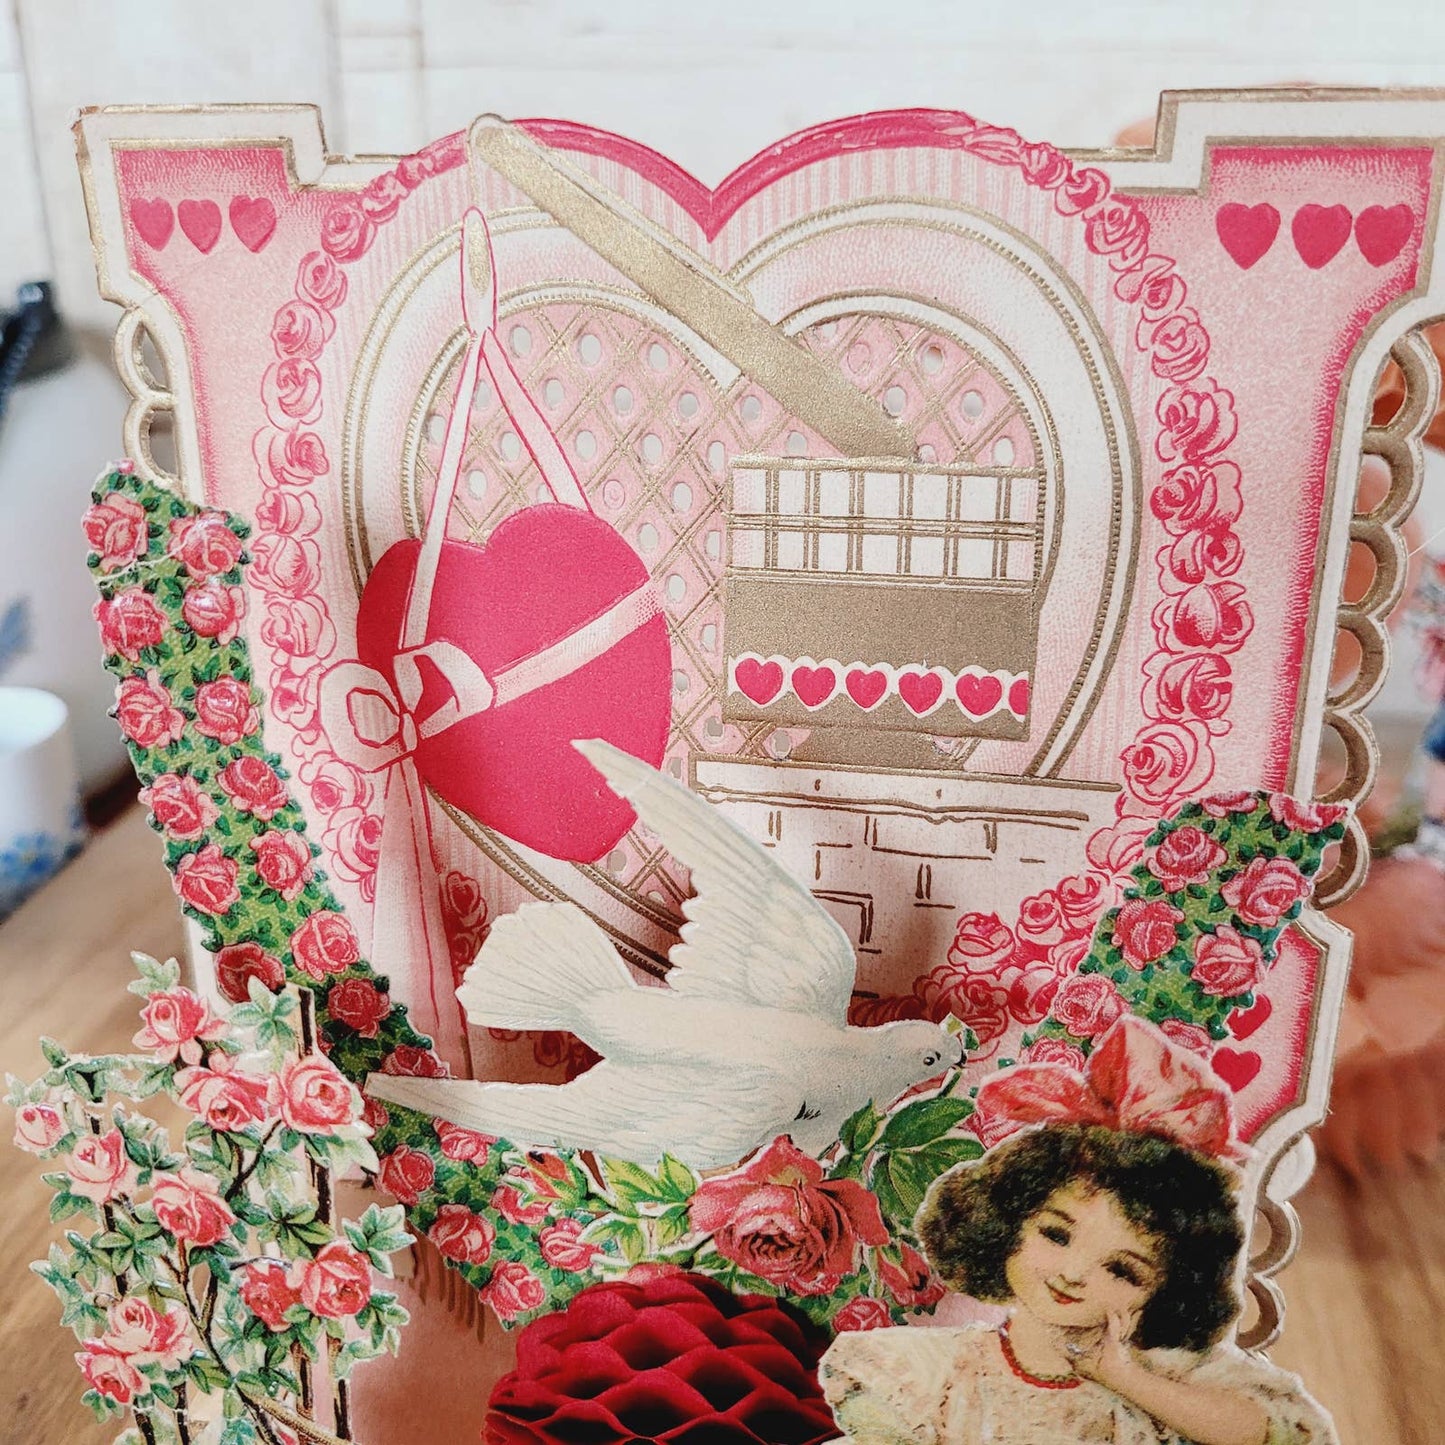 2 Antique Vintage Valentines Cards 3D Honeycomb Victorian Die Cut